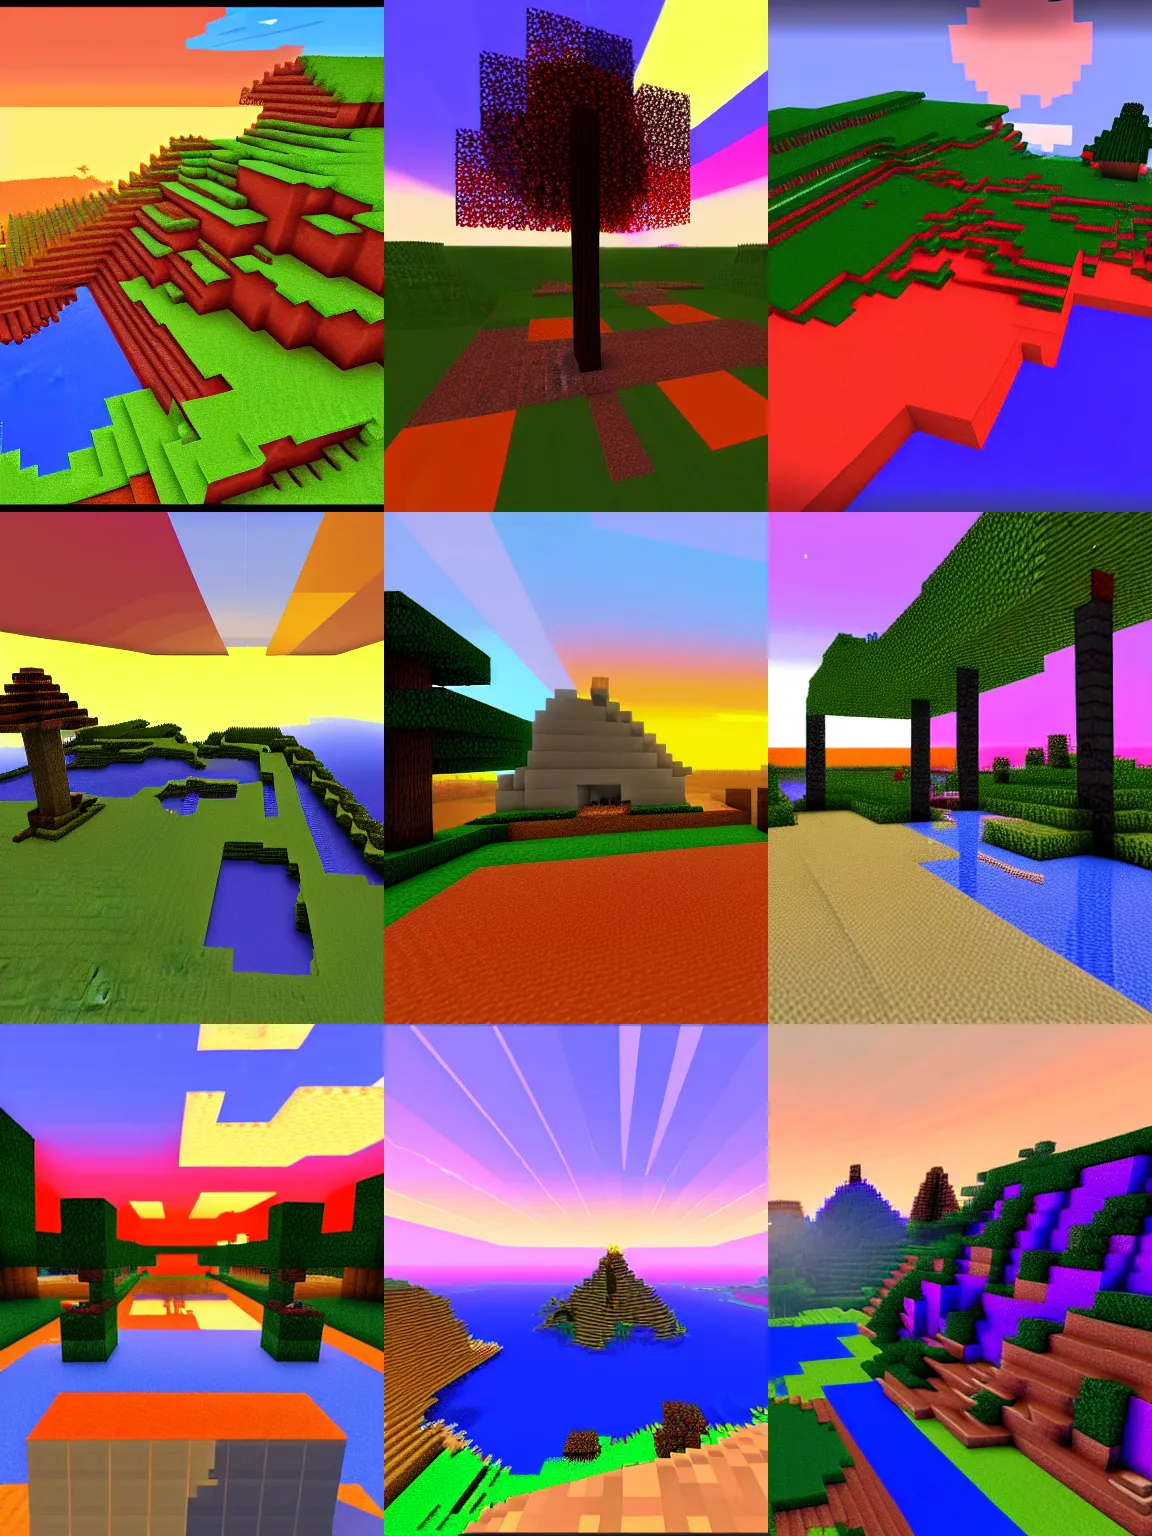 Prompt: a beautiful sunset landscape in minecraft,